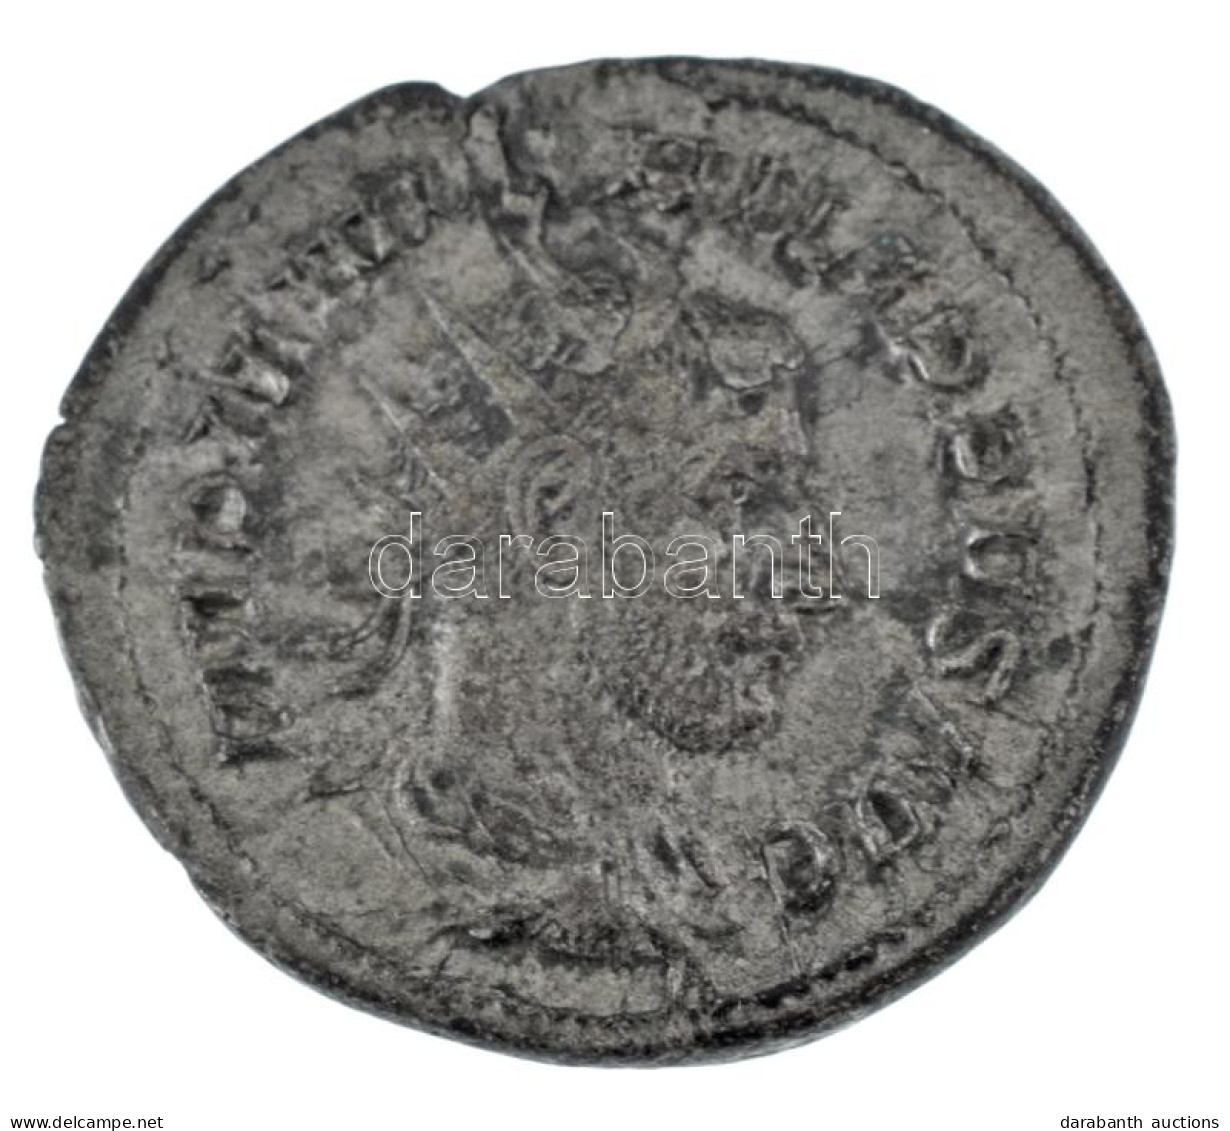 Római Birodalom / Róma / I. Philippus Arabs 244-249. Antoninianus Billon (3,98g) T:XF Patina Roman Empire / Rome / Phili - Ohne Zuordnung